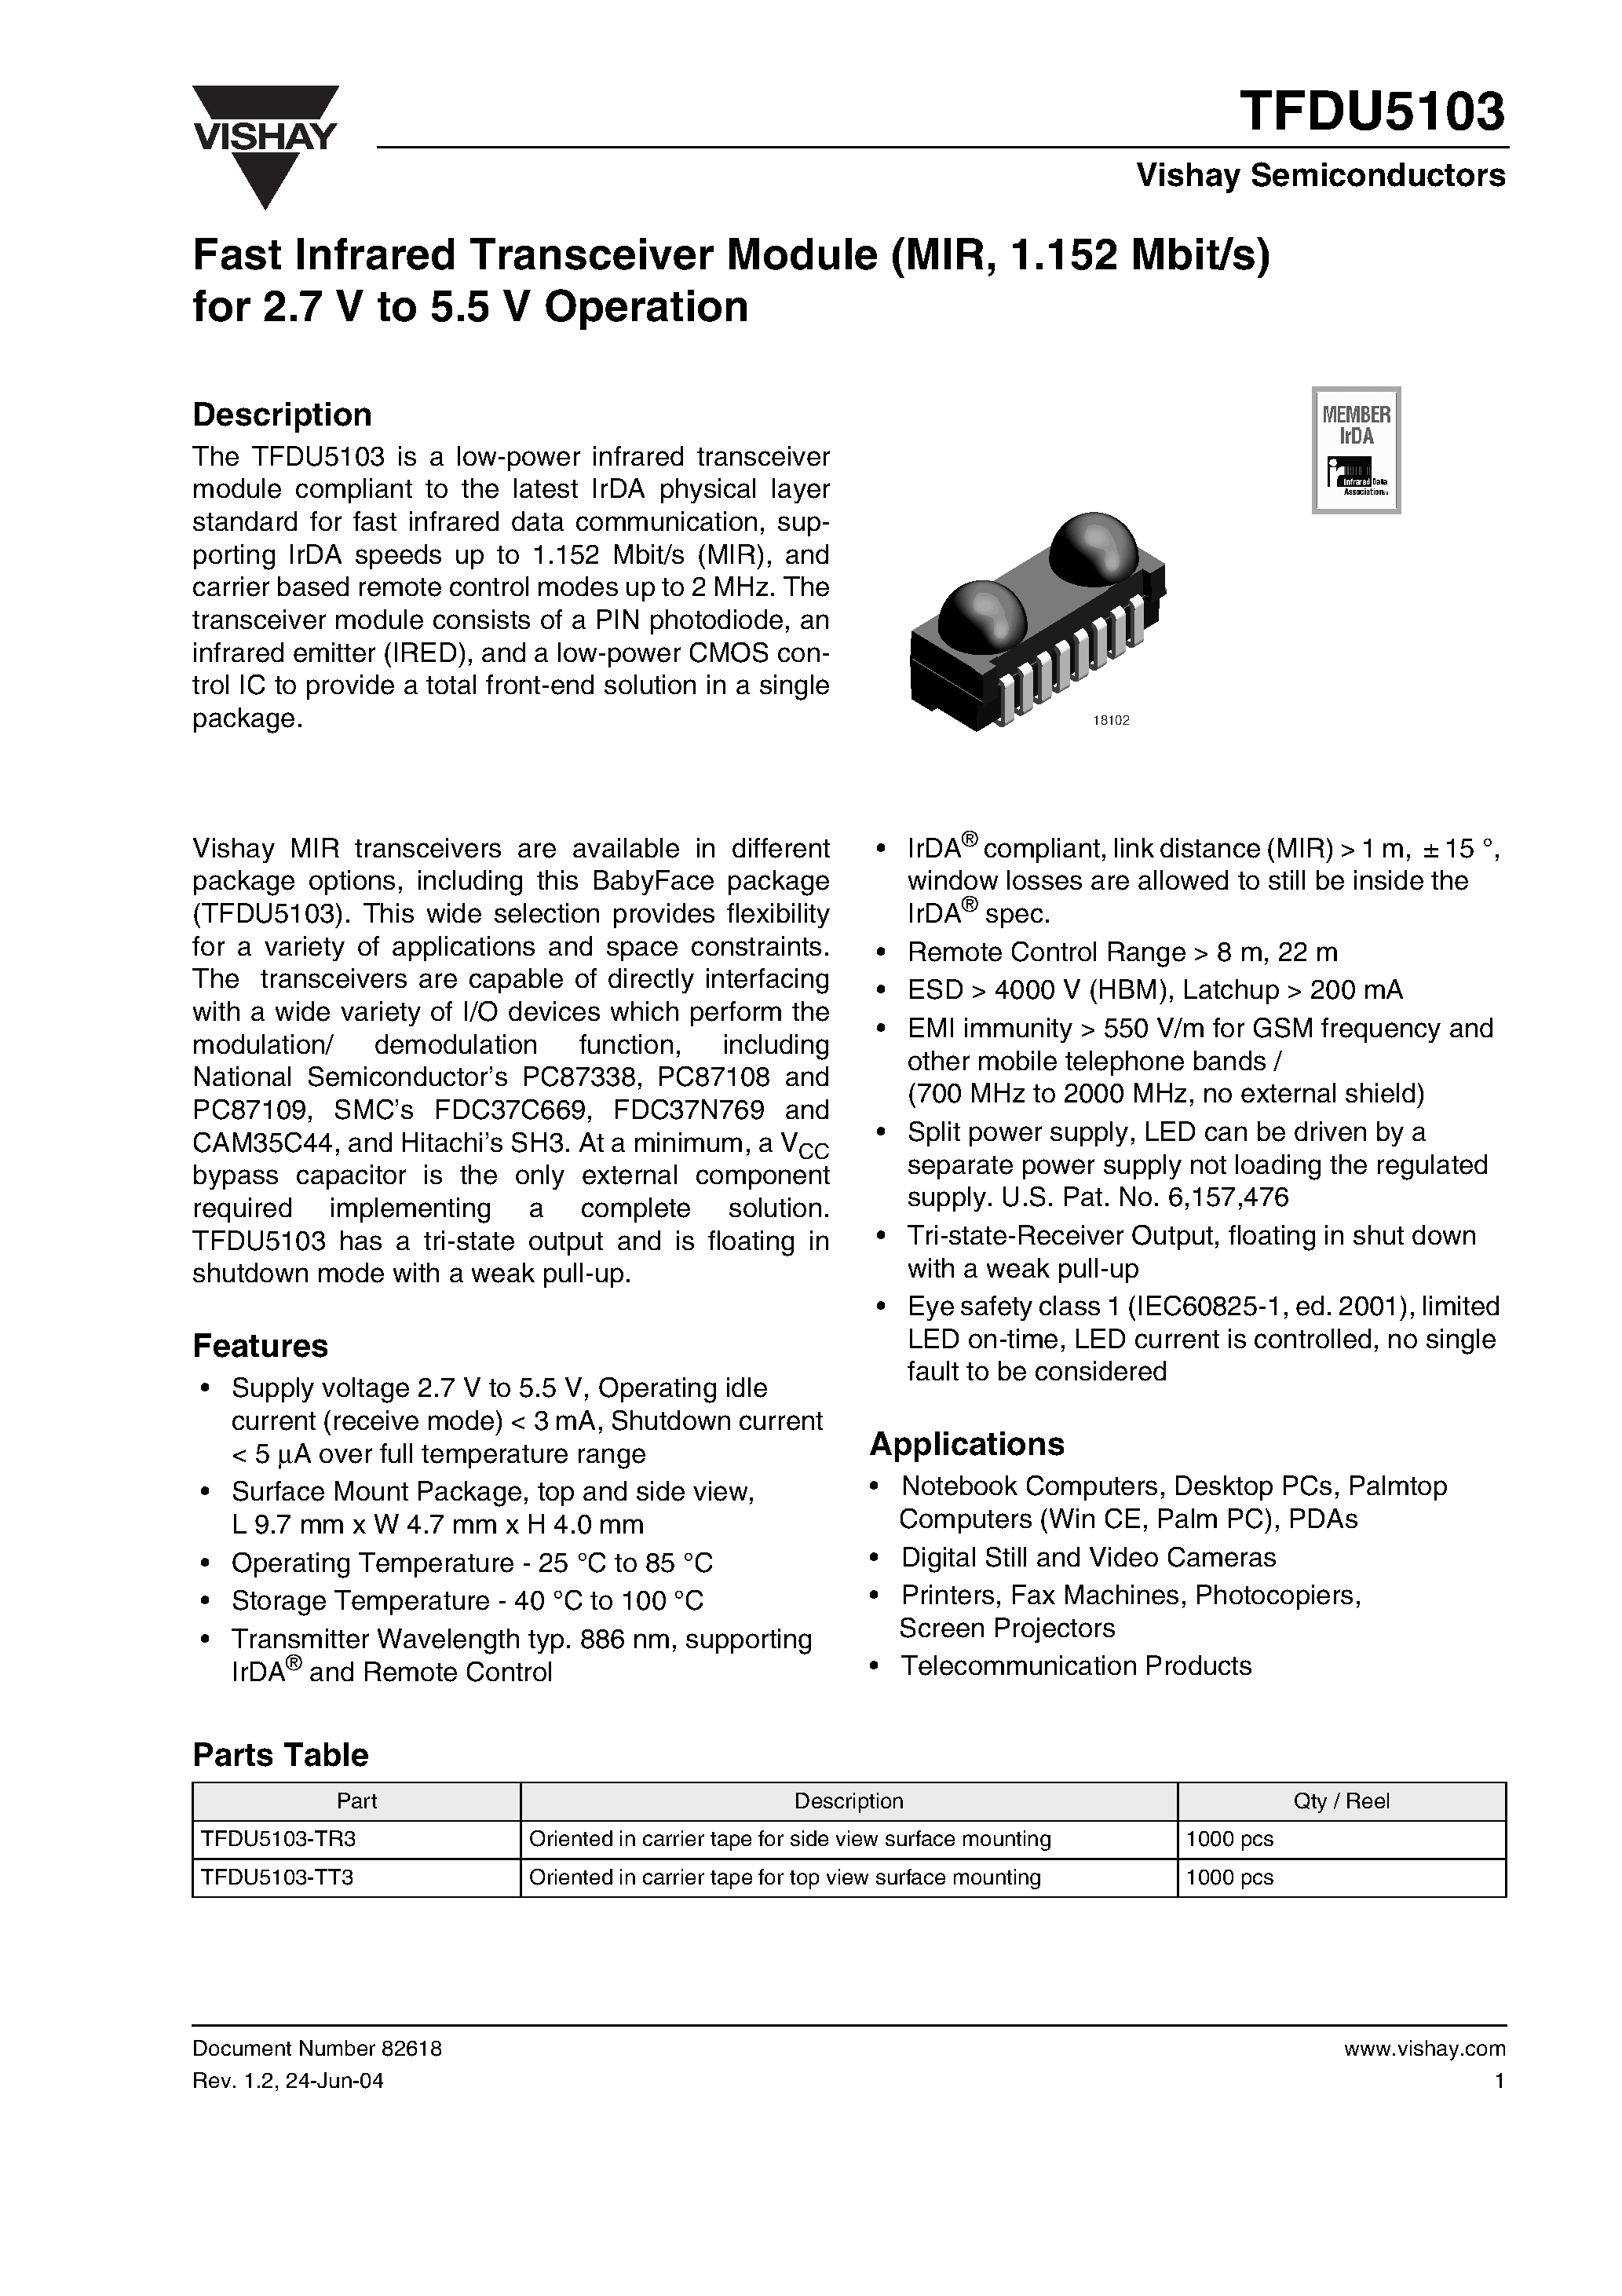 Datasheet TFDU5103 - Fast Infrared Transceiver Module (MIR/ 1.152 Mbit/s) for 2.7 V to 5.5 V Operation page 1